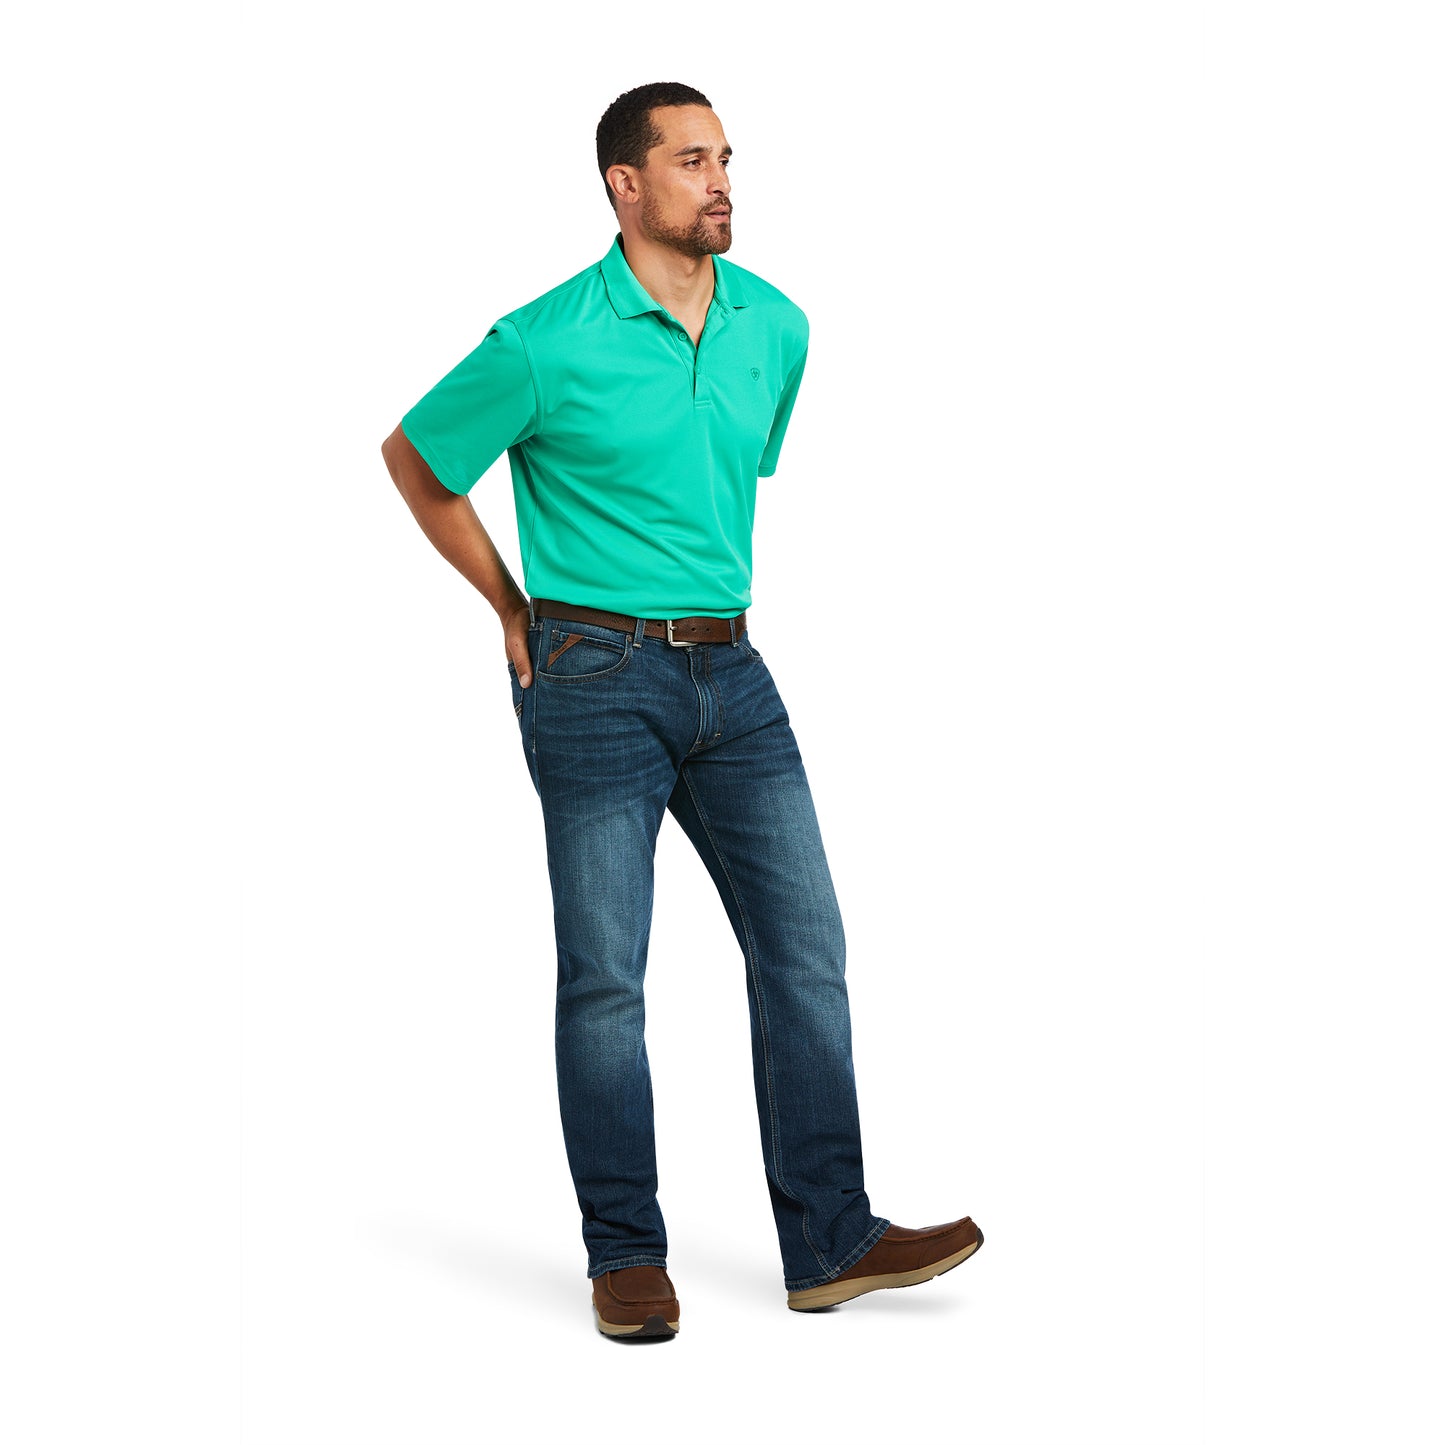 Ariat Men's TEK Mint Polo Short Sleeve Shirt 10039379